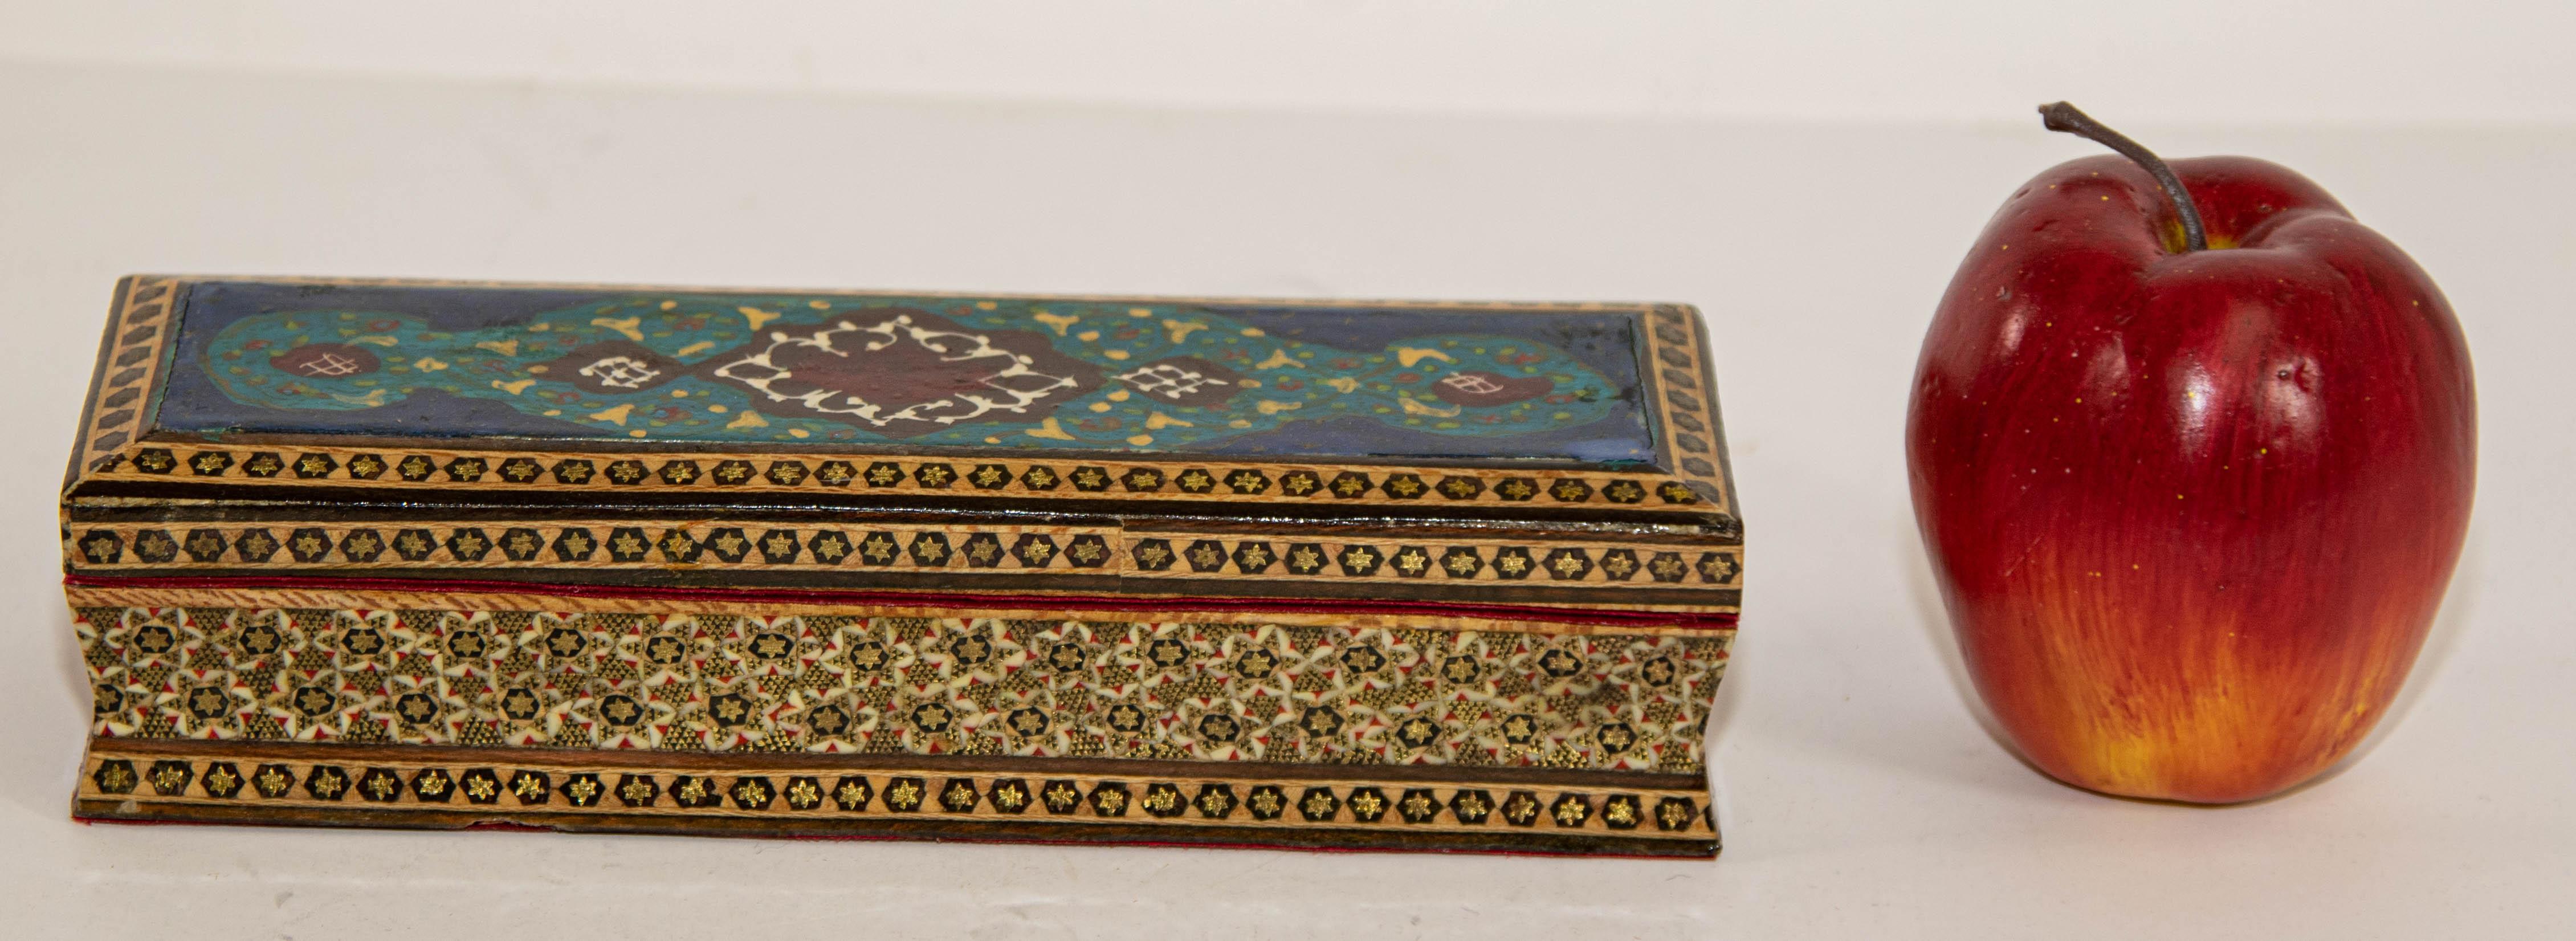 Micro Mosaic Moorish Inlaid Jewelry Pen Box For Sale 3